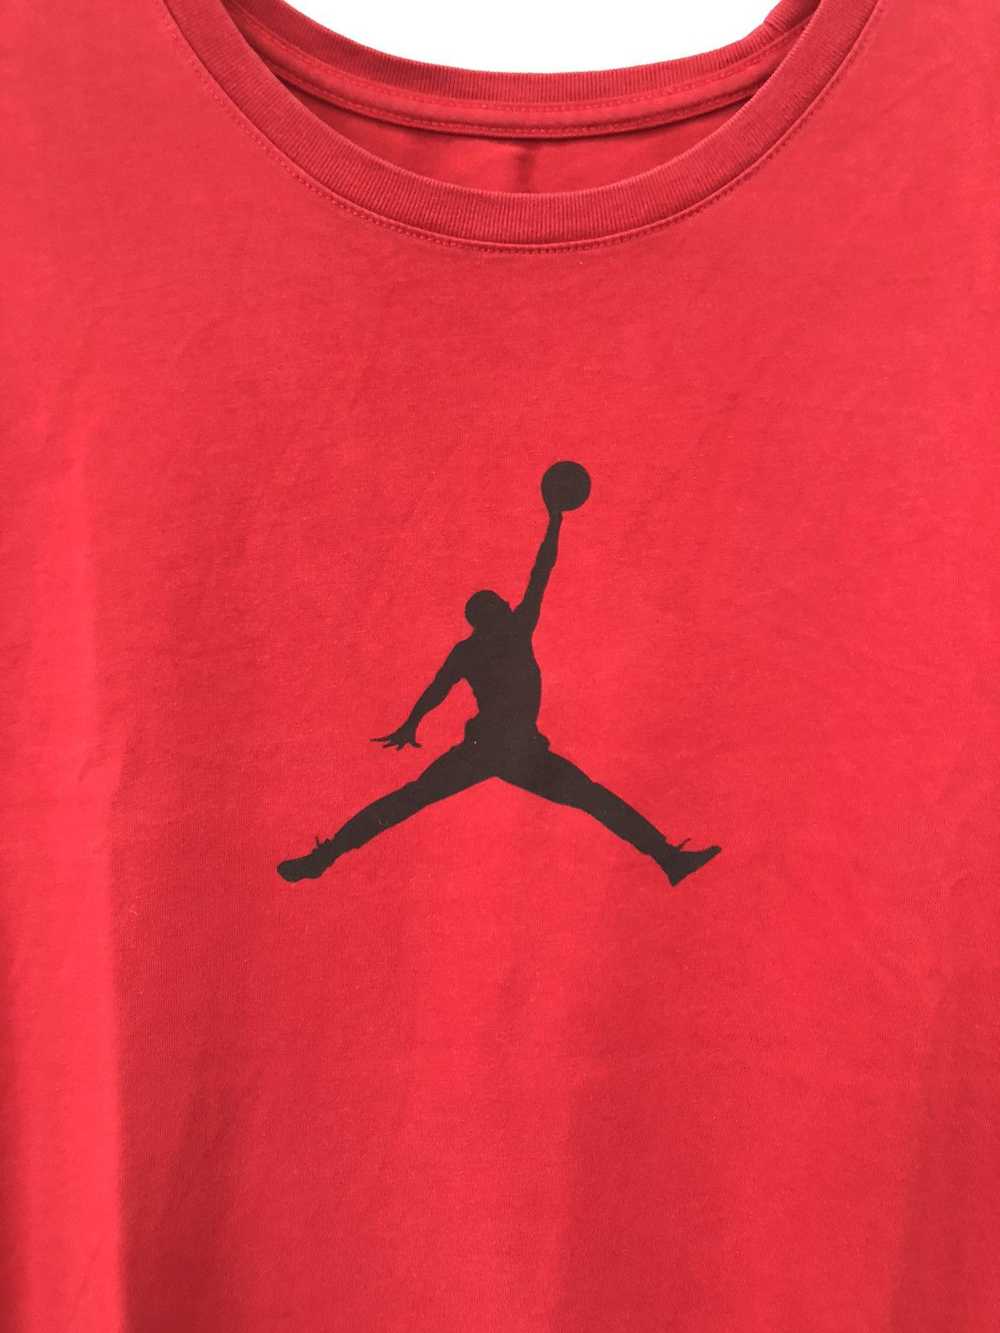 Jordan Brand × NBA × Nike Jordan Nike Red T-Shirt - image 5